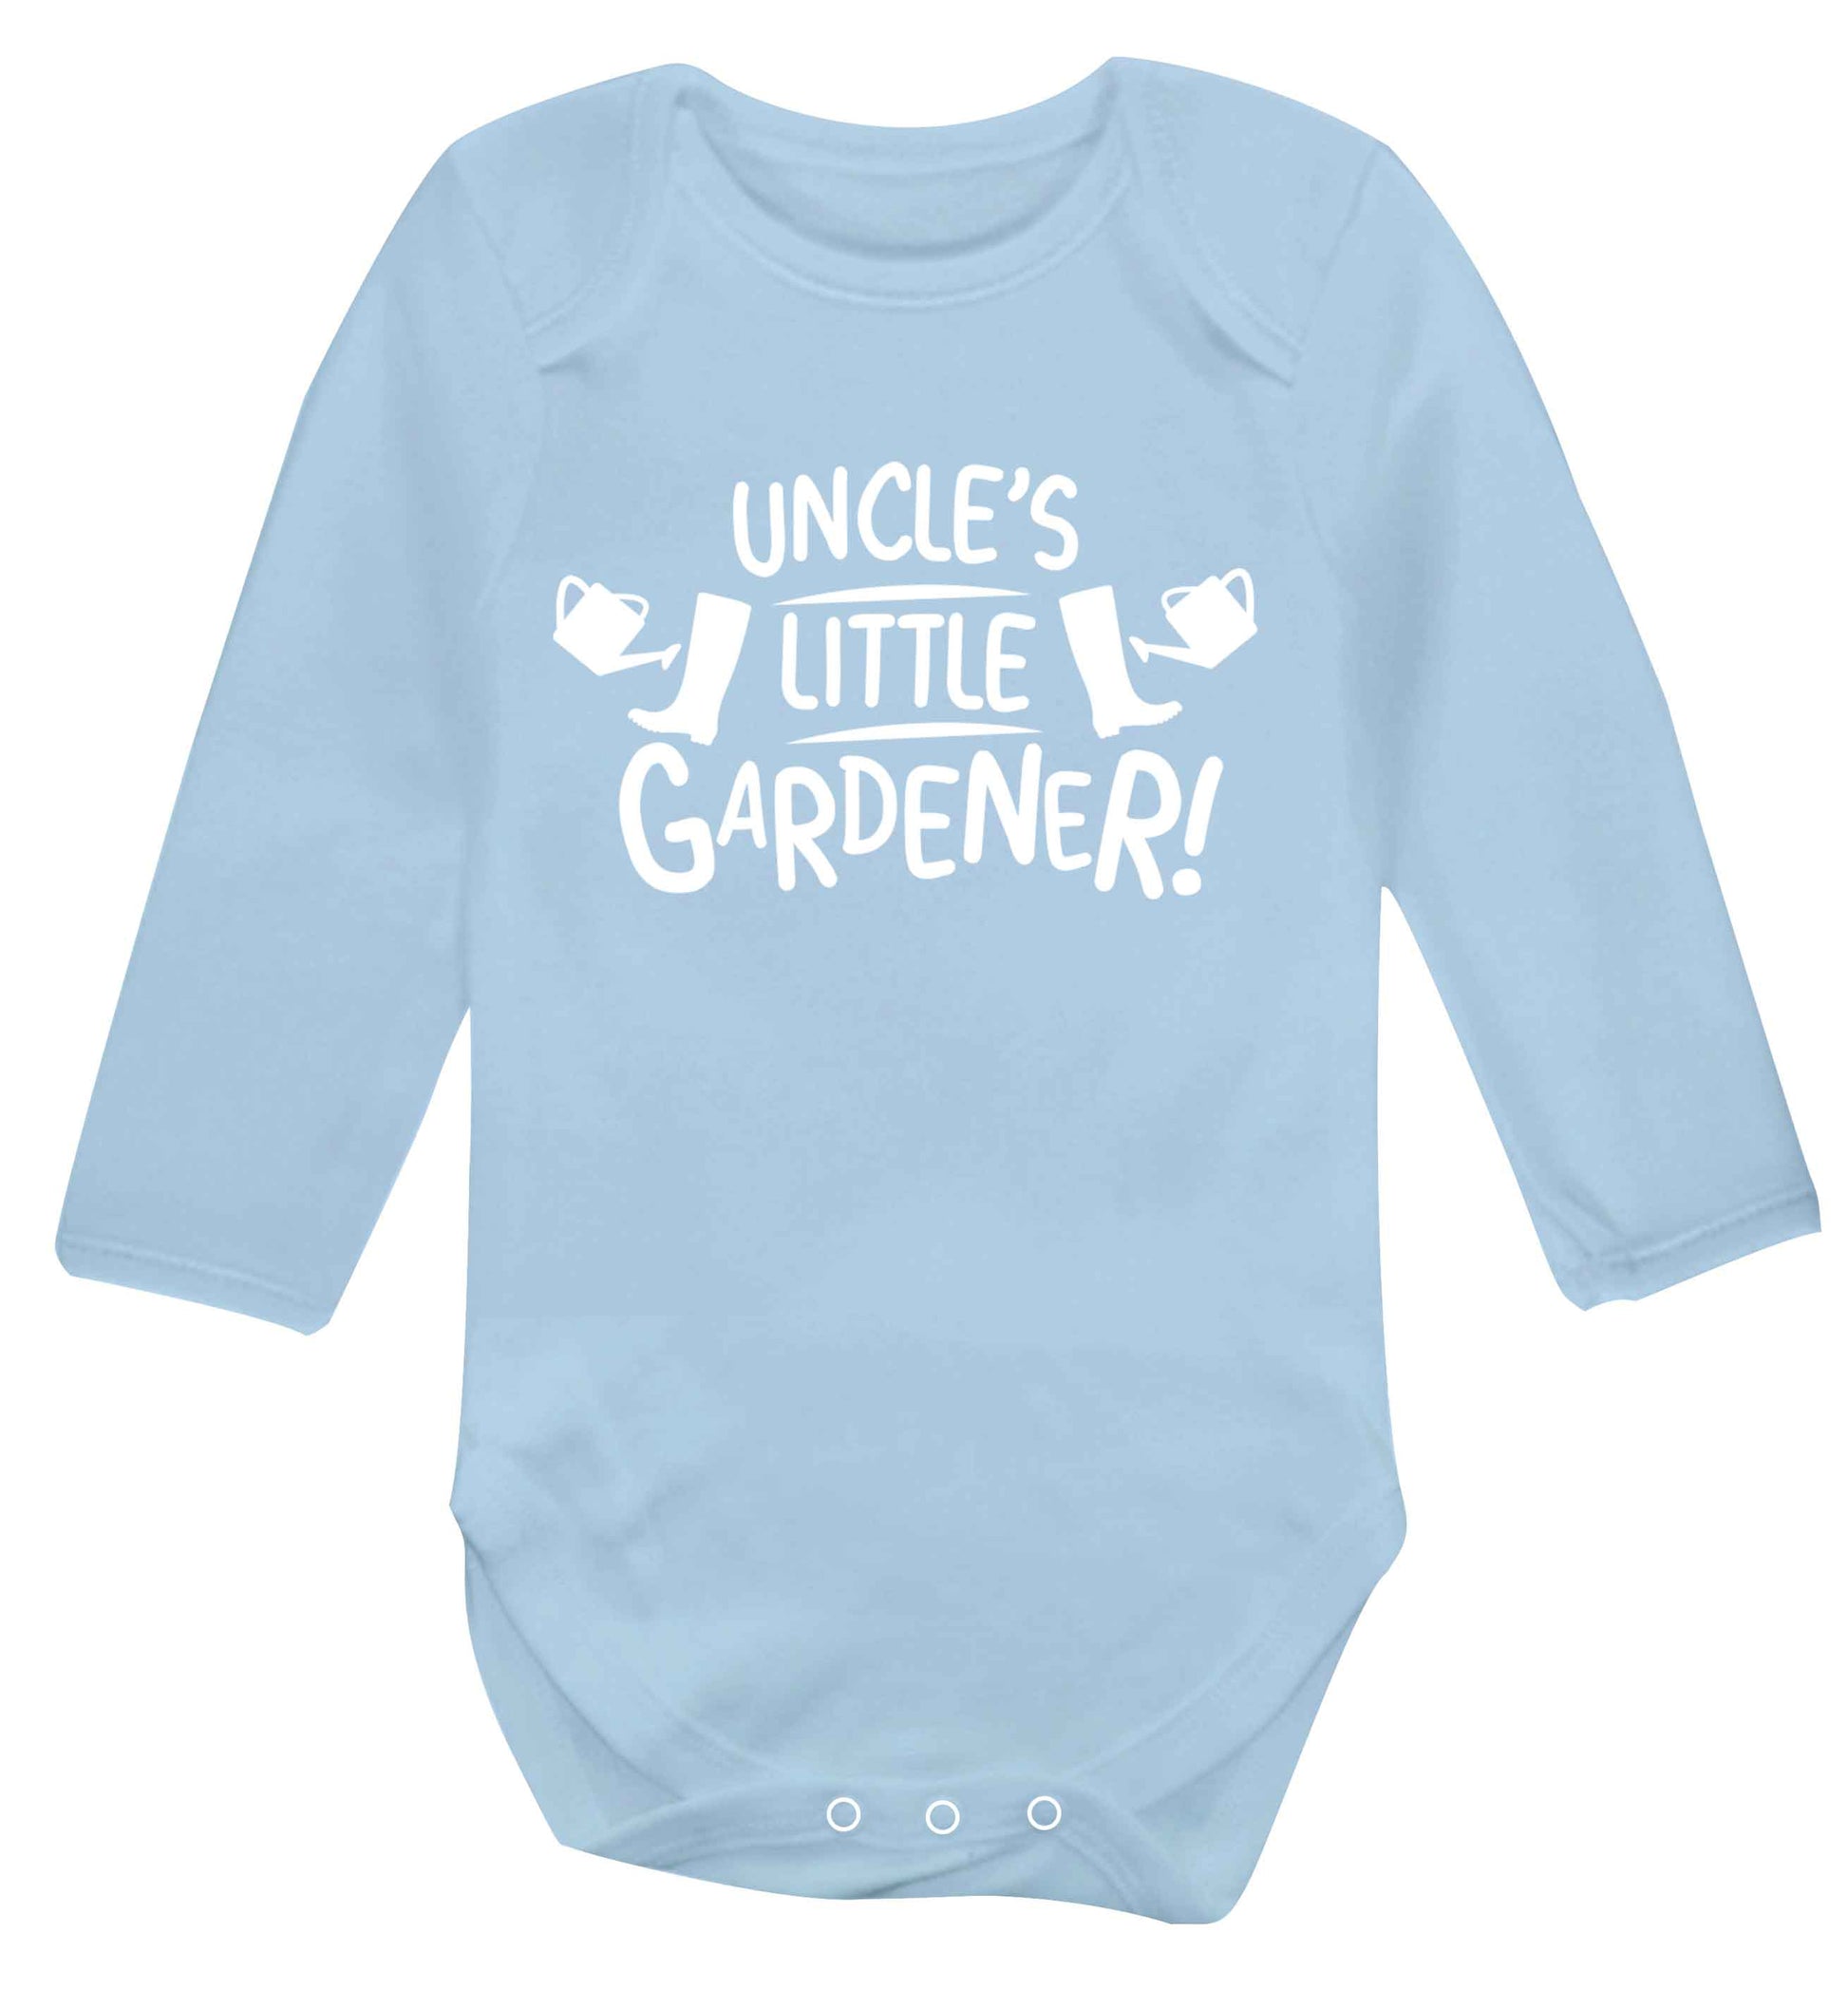 Uncle's little gardener Baby Vest long sleeved pale blue 6-12 months